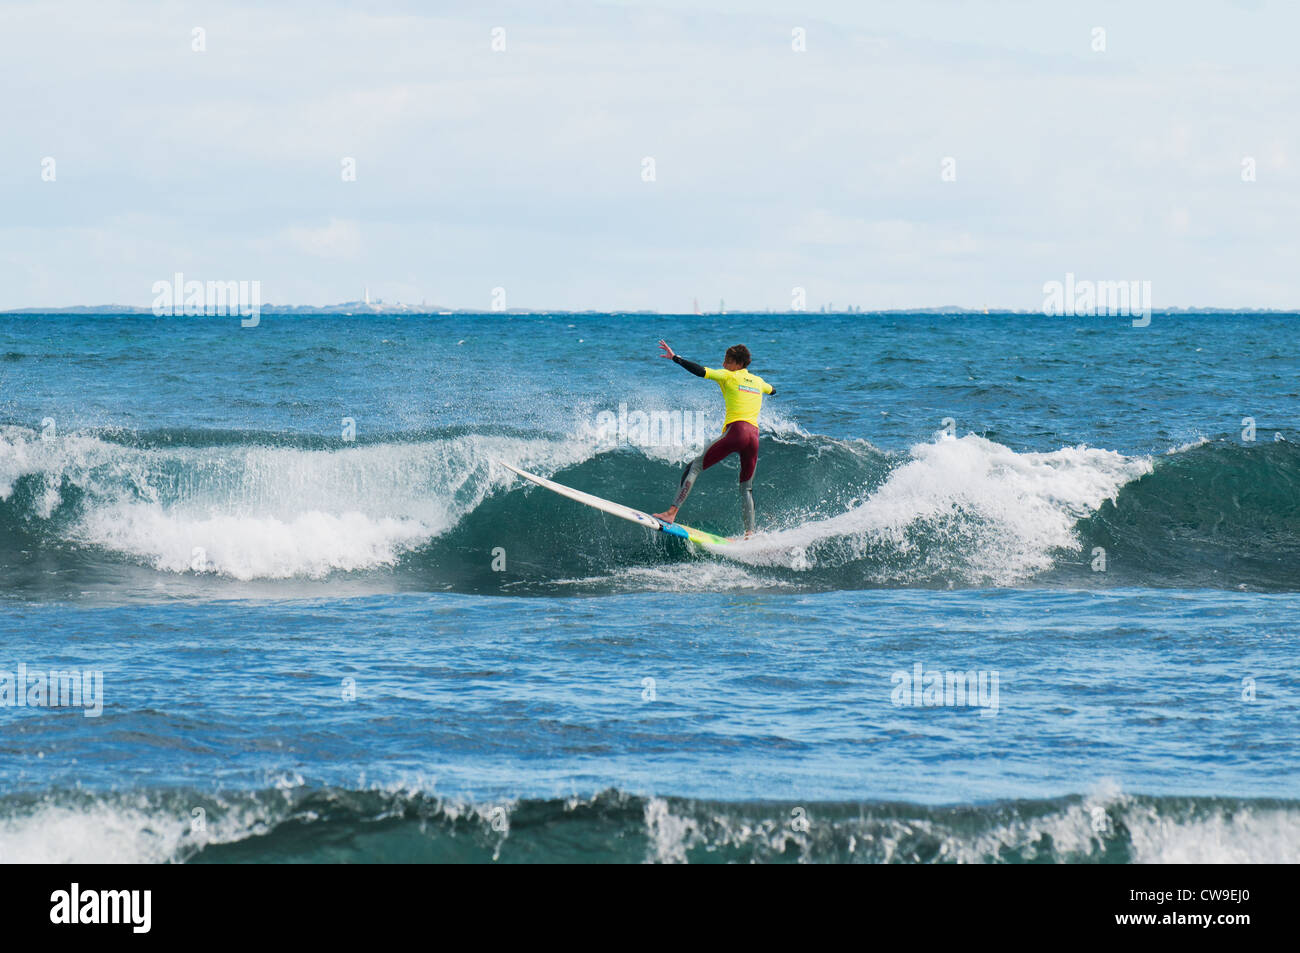 A surfer on a longboard at Isolators Reef in Western Australia. Stock Photo